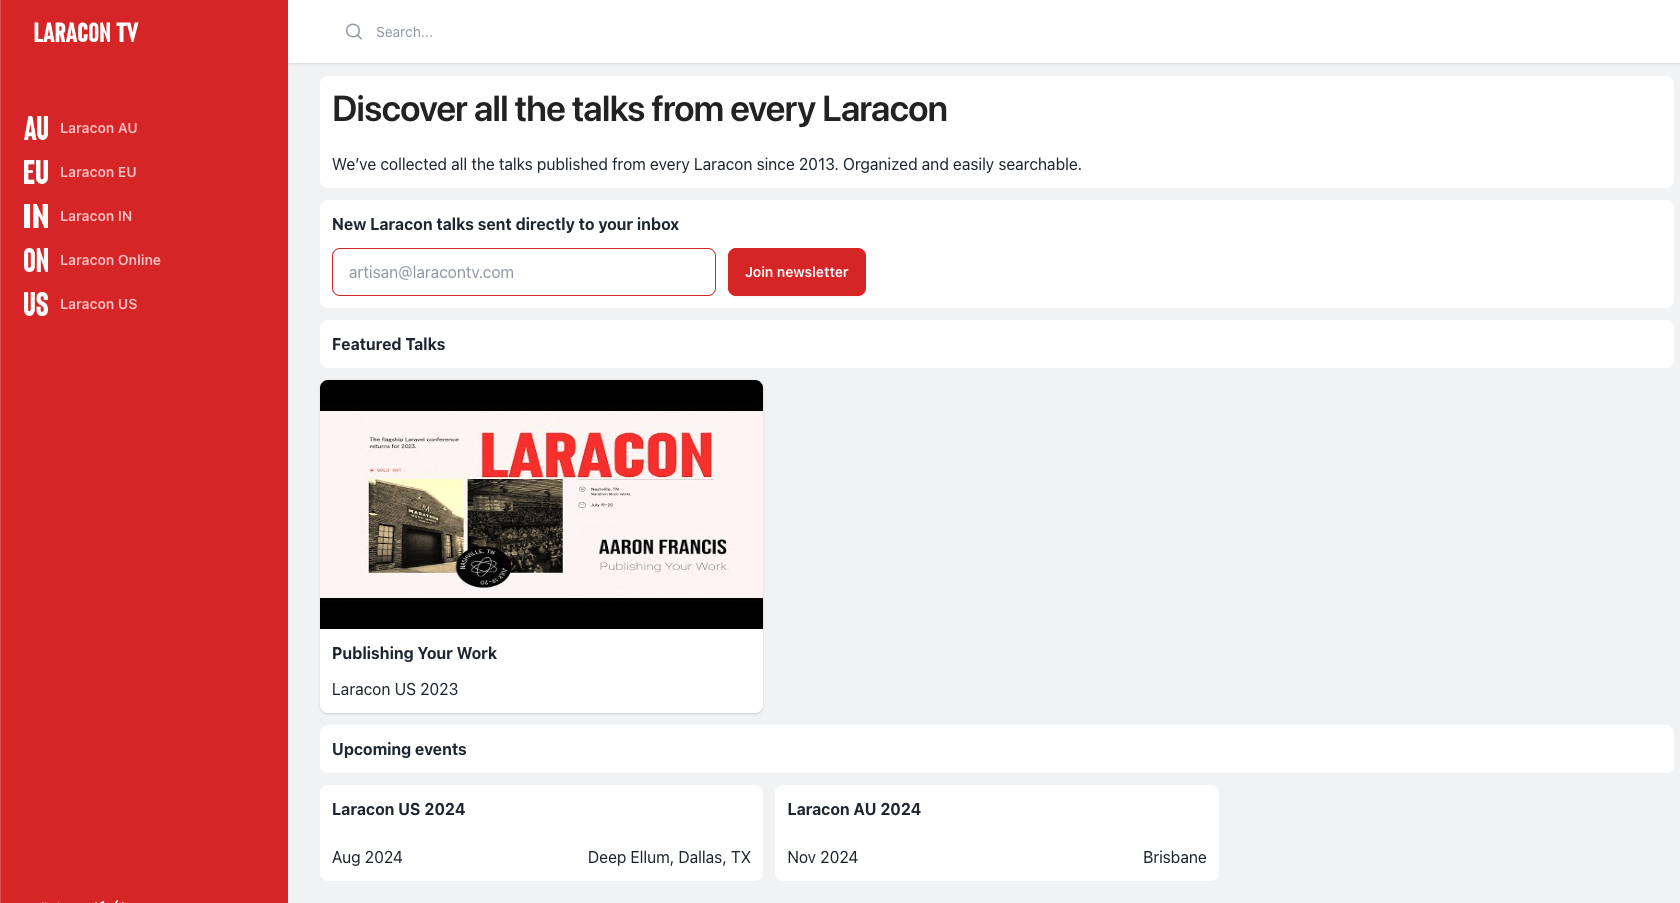 Laracon TV